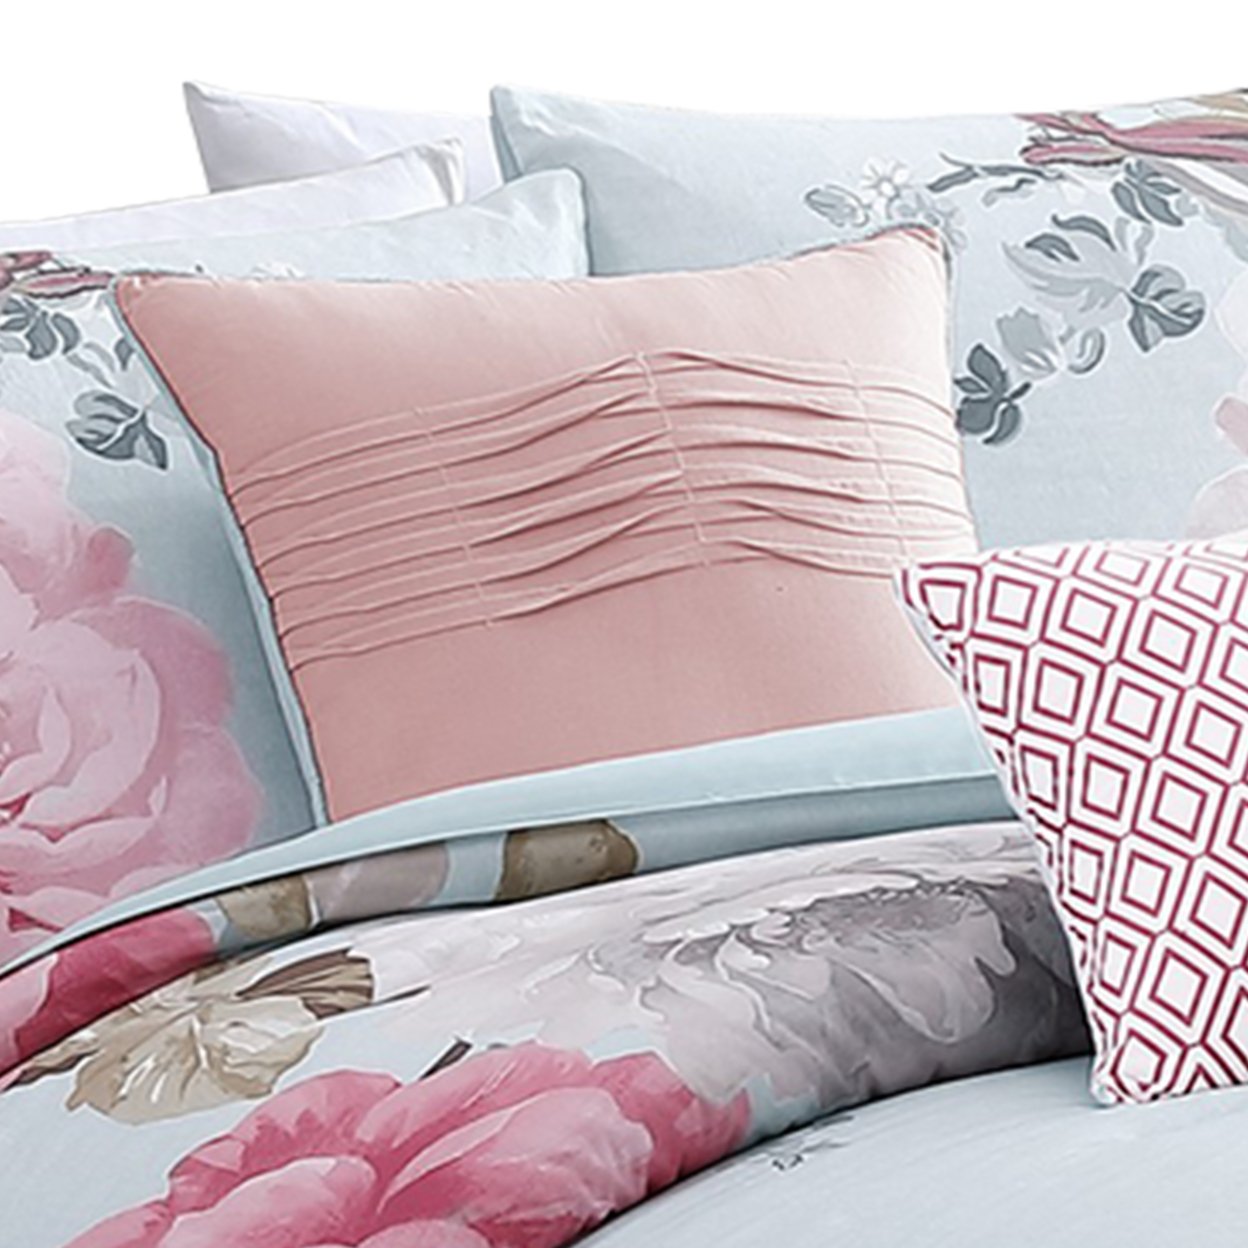 Queen Size 7 Piece Fabric Comforter Set With Floral Prints, Multicolor- Saltoro Sherpi